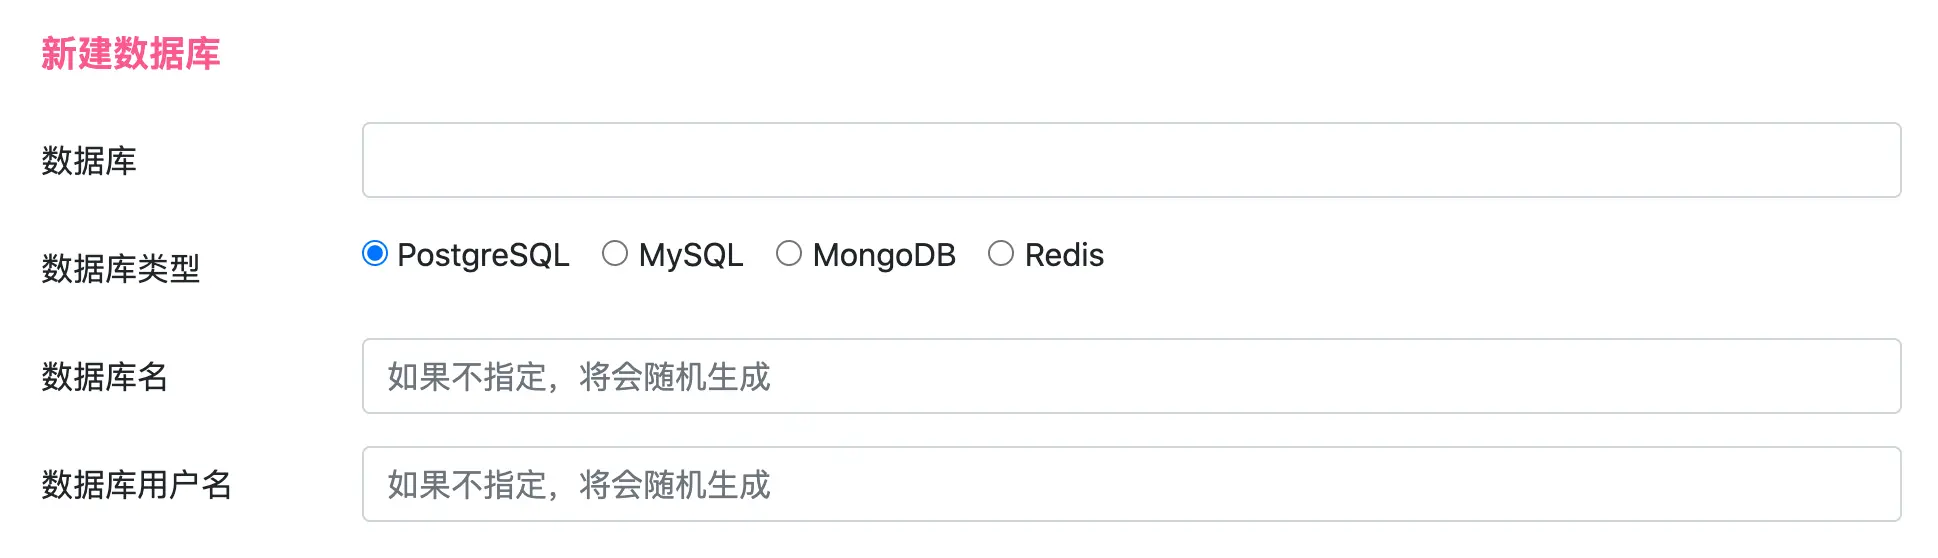 Create a MySQL database and Show Configuration Screenshots